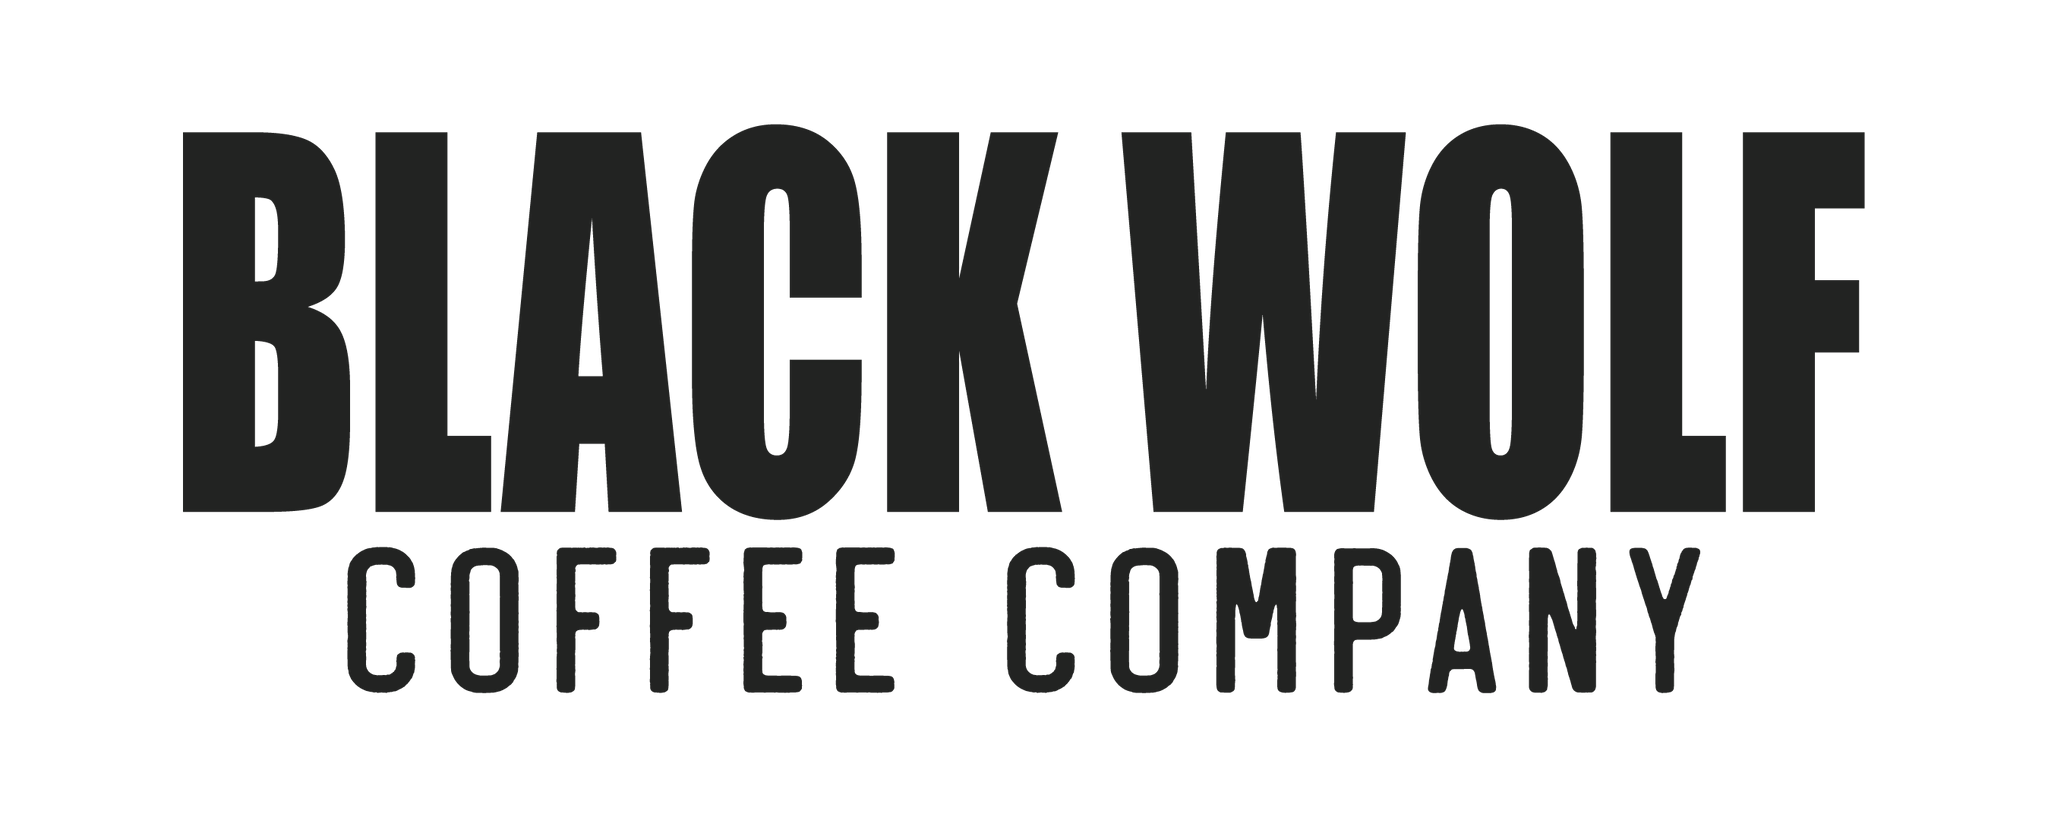 Black Wolf Coffee Company